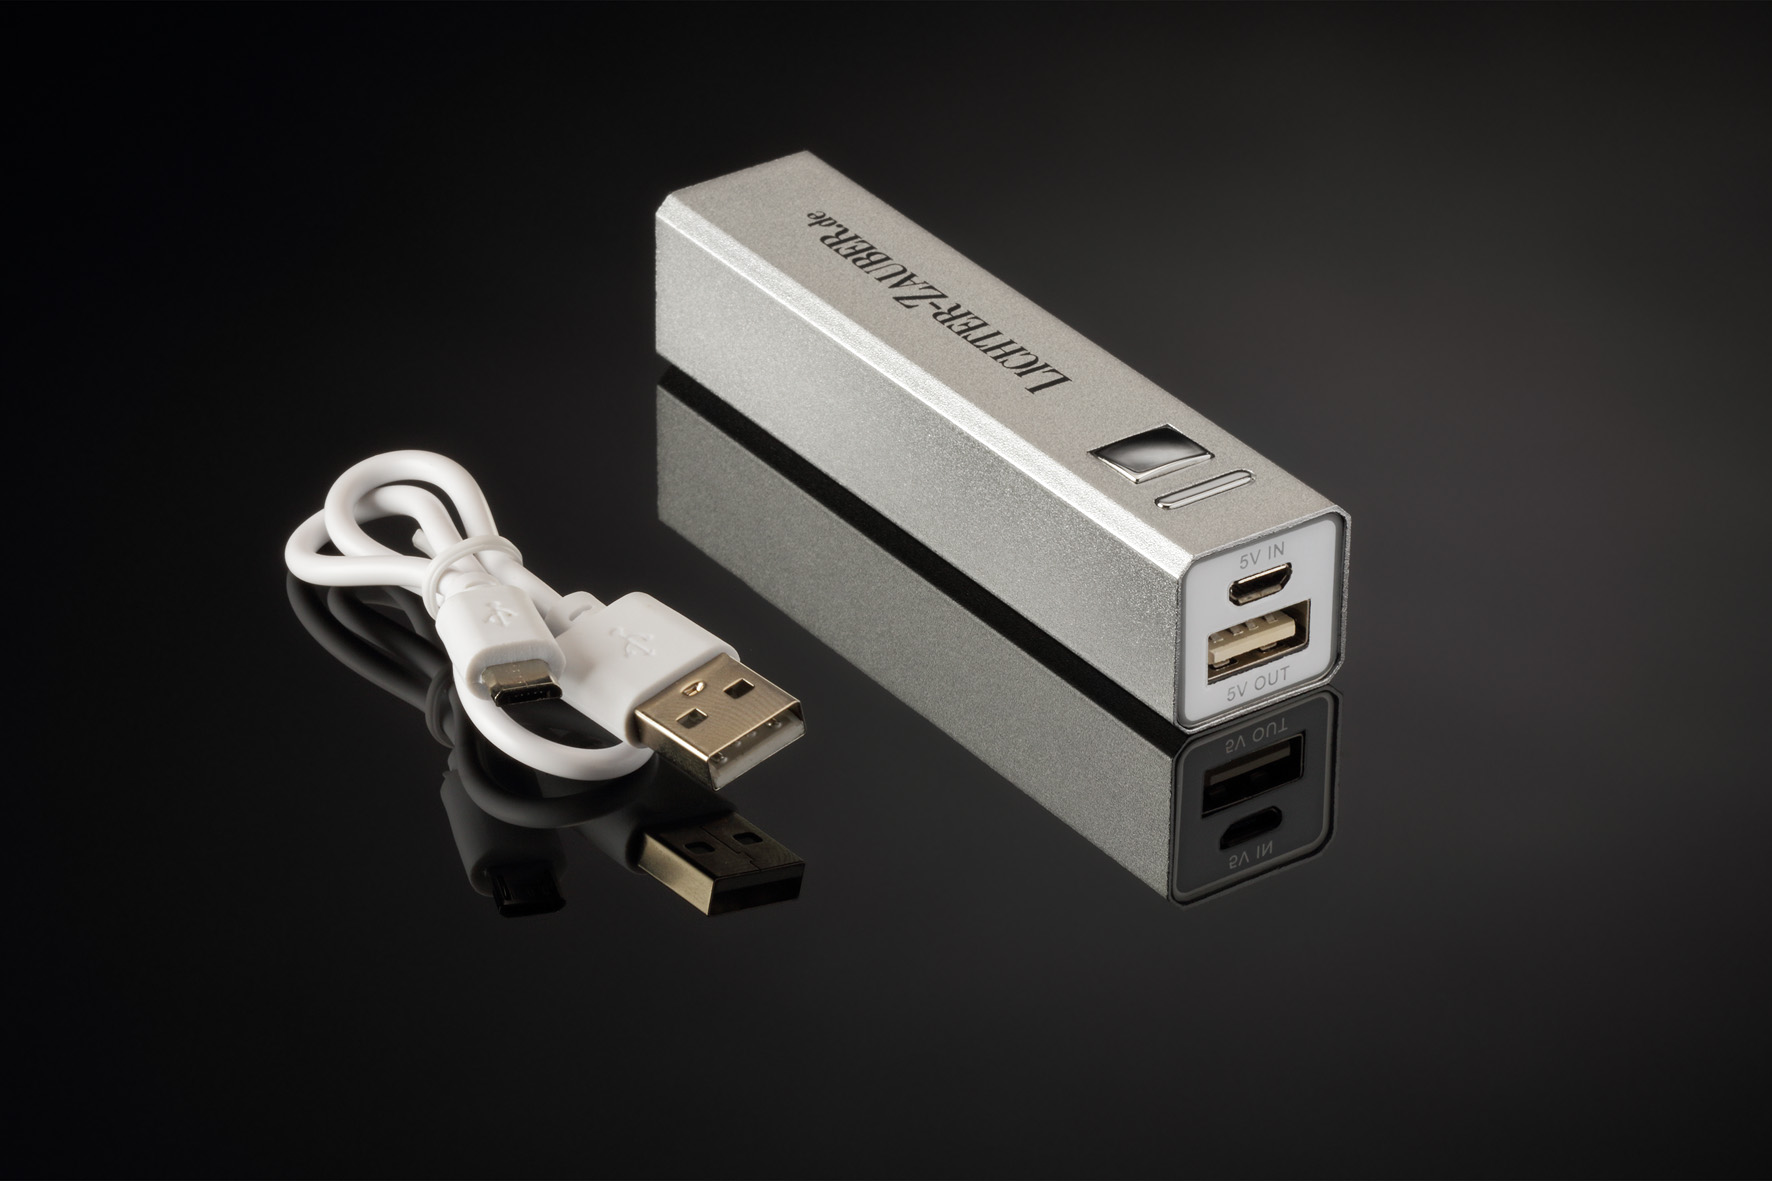 Kaufe 5V USB Große Heizdecke Angetrieben Durch Power Bank Winter